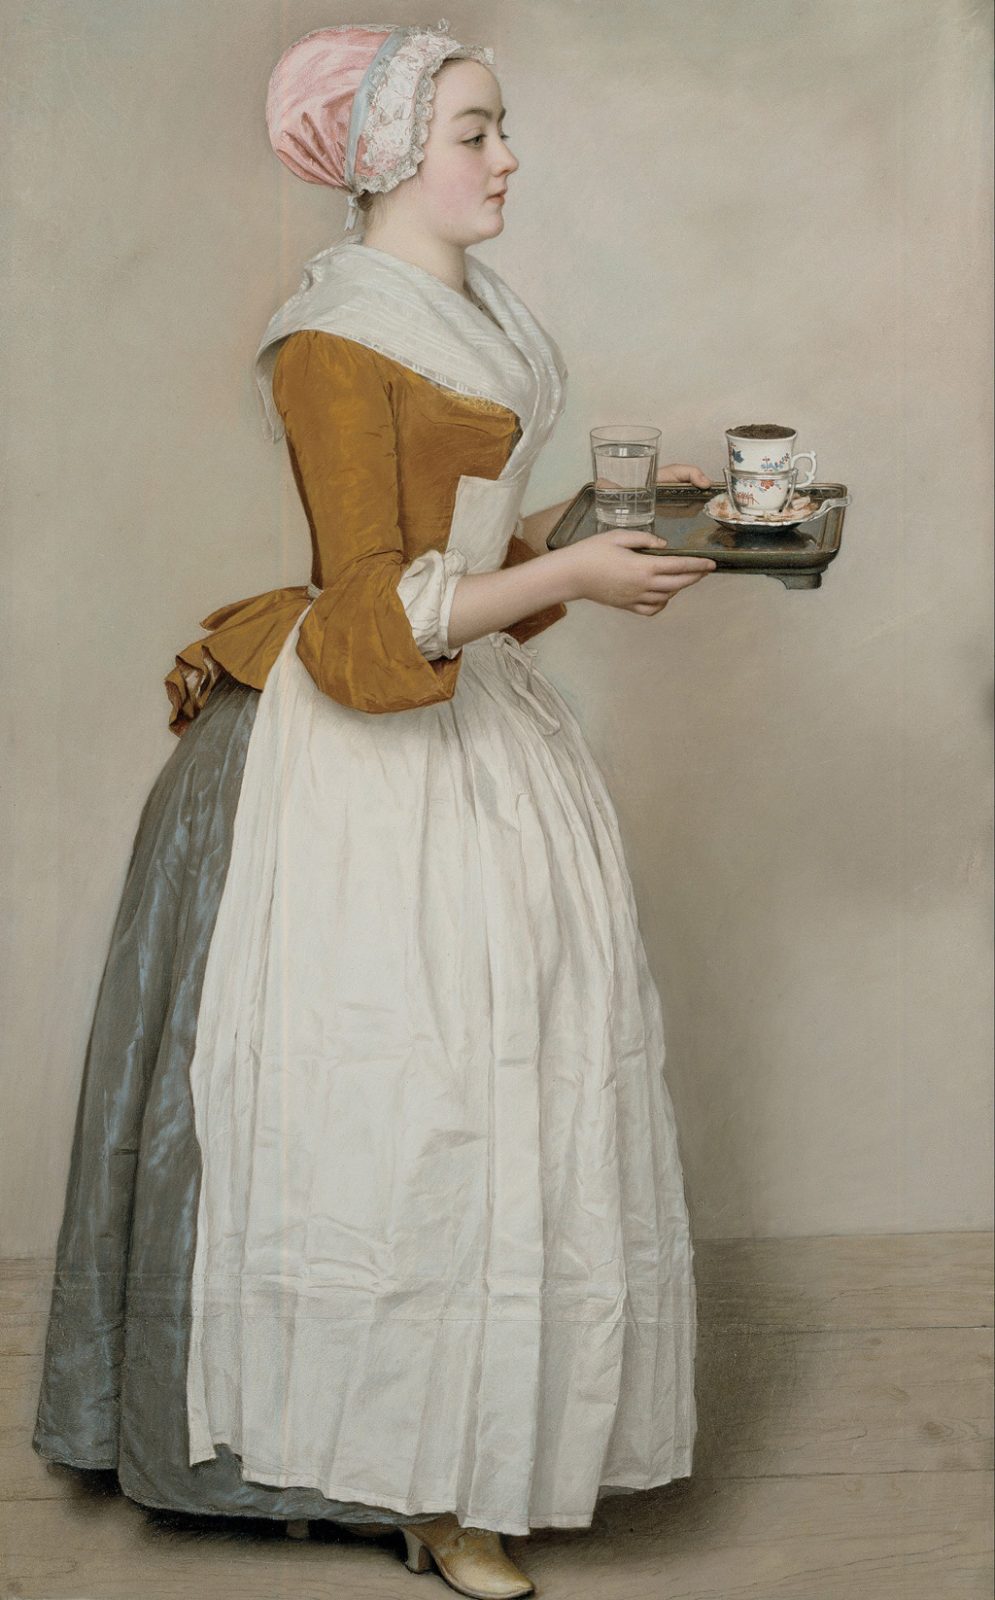 chocolate-serving hostess (Liotard's "Chocolate girl")